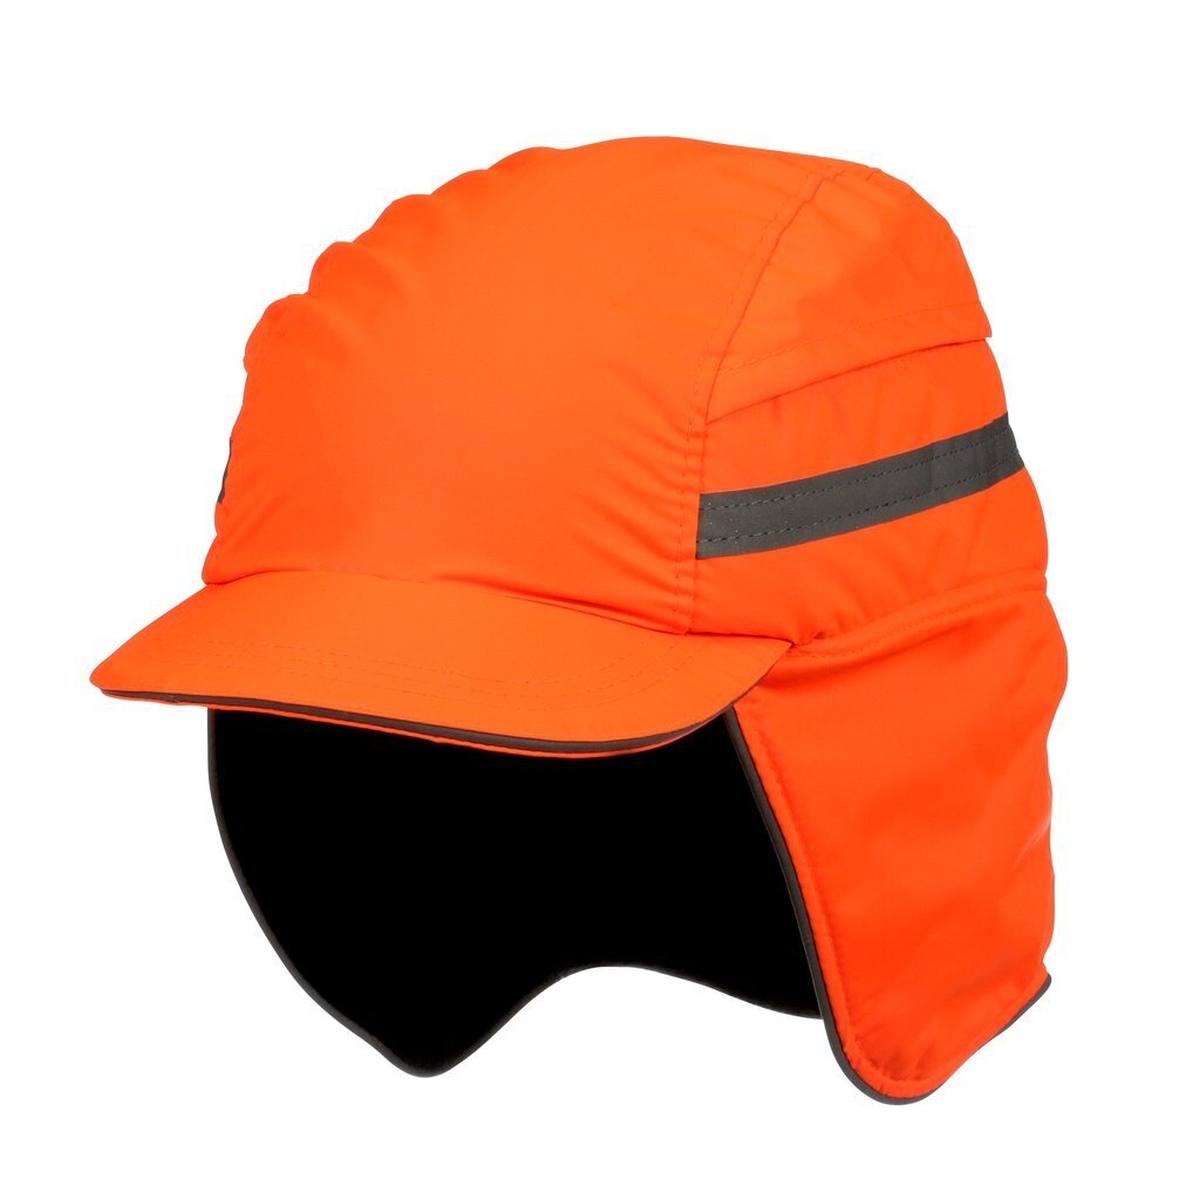 3M Scott First Base 3 Winter - bump cap in signal colour orange - shortened peak 55 mm, EN812